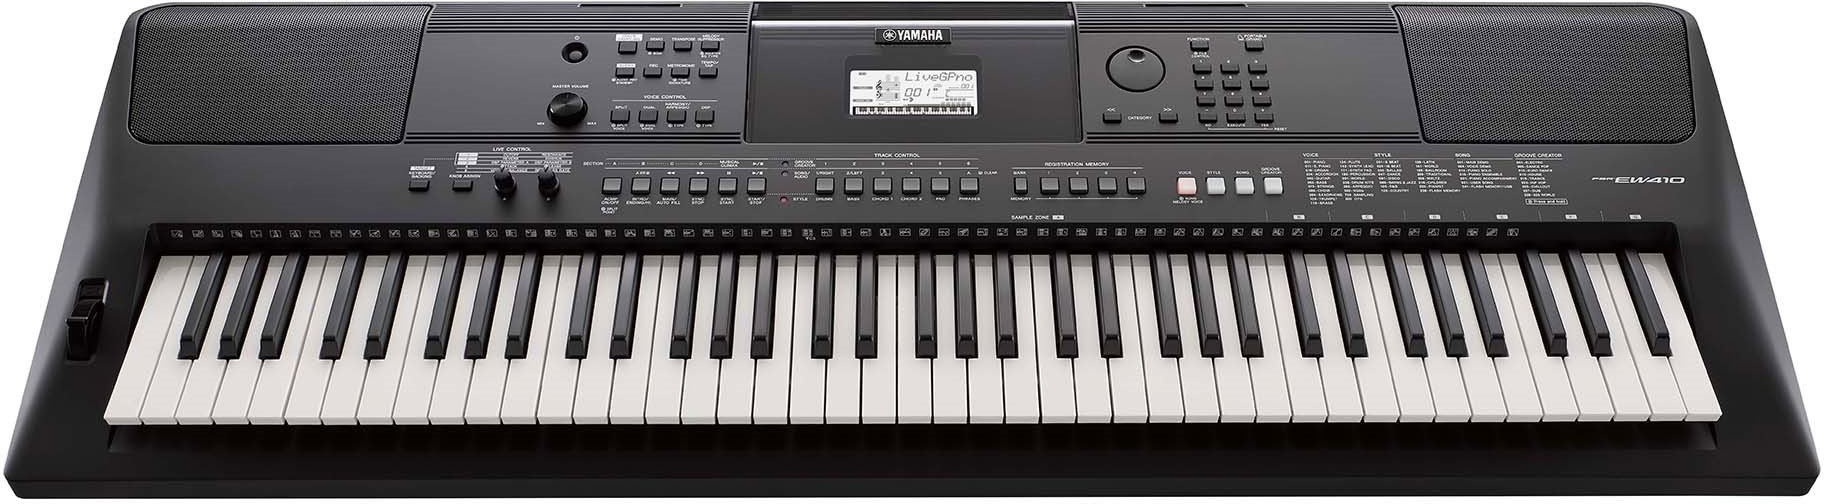 Yamaha Psr-ew410 - Entertainer Keyboard - Main picture